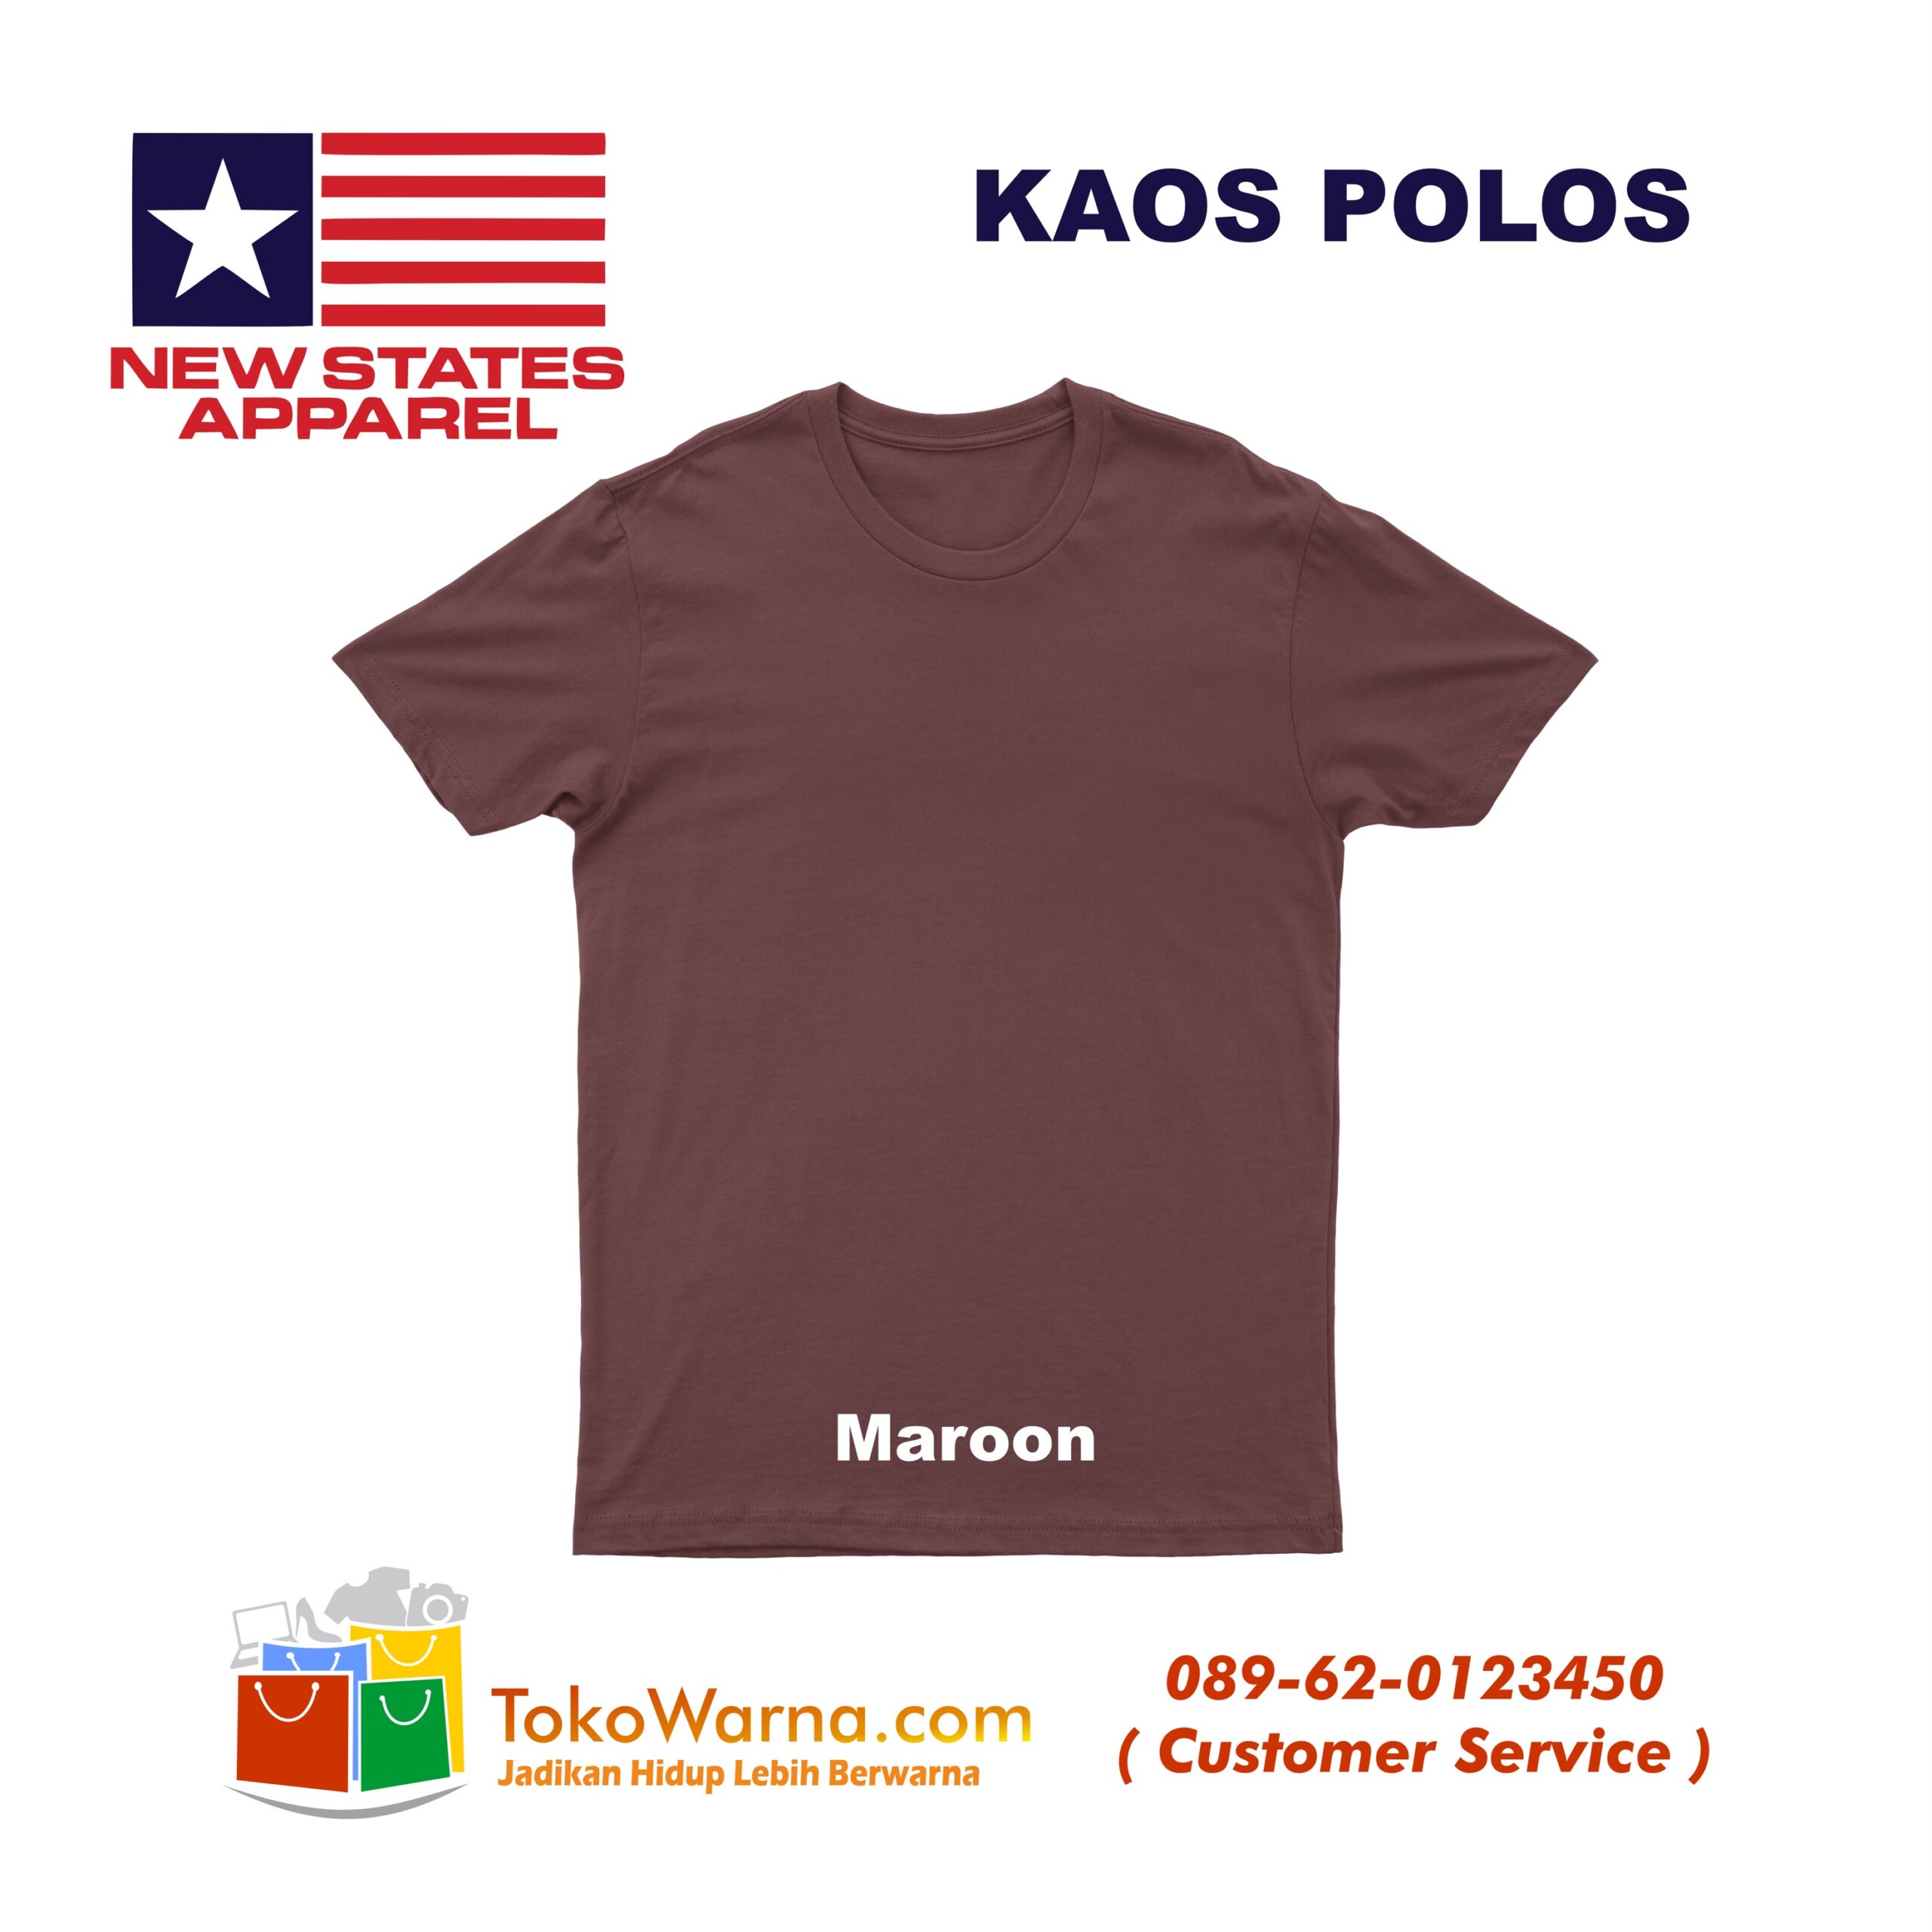 (NSA) New States Apparel Soft Tee 30s Kaos Polos Maroon